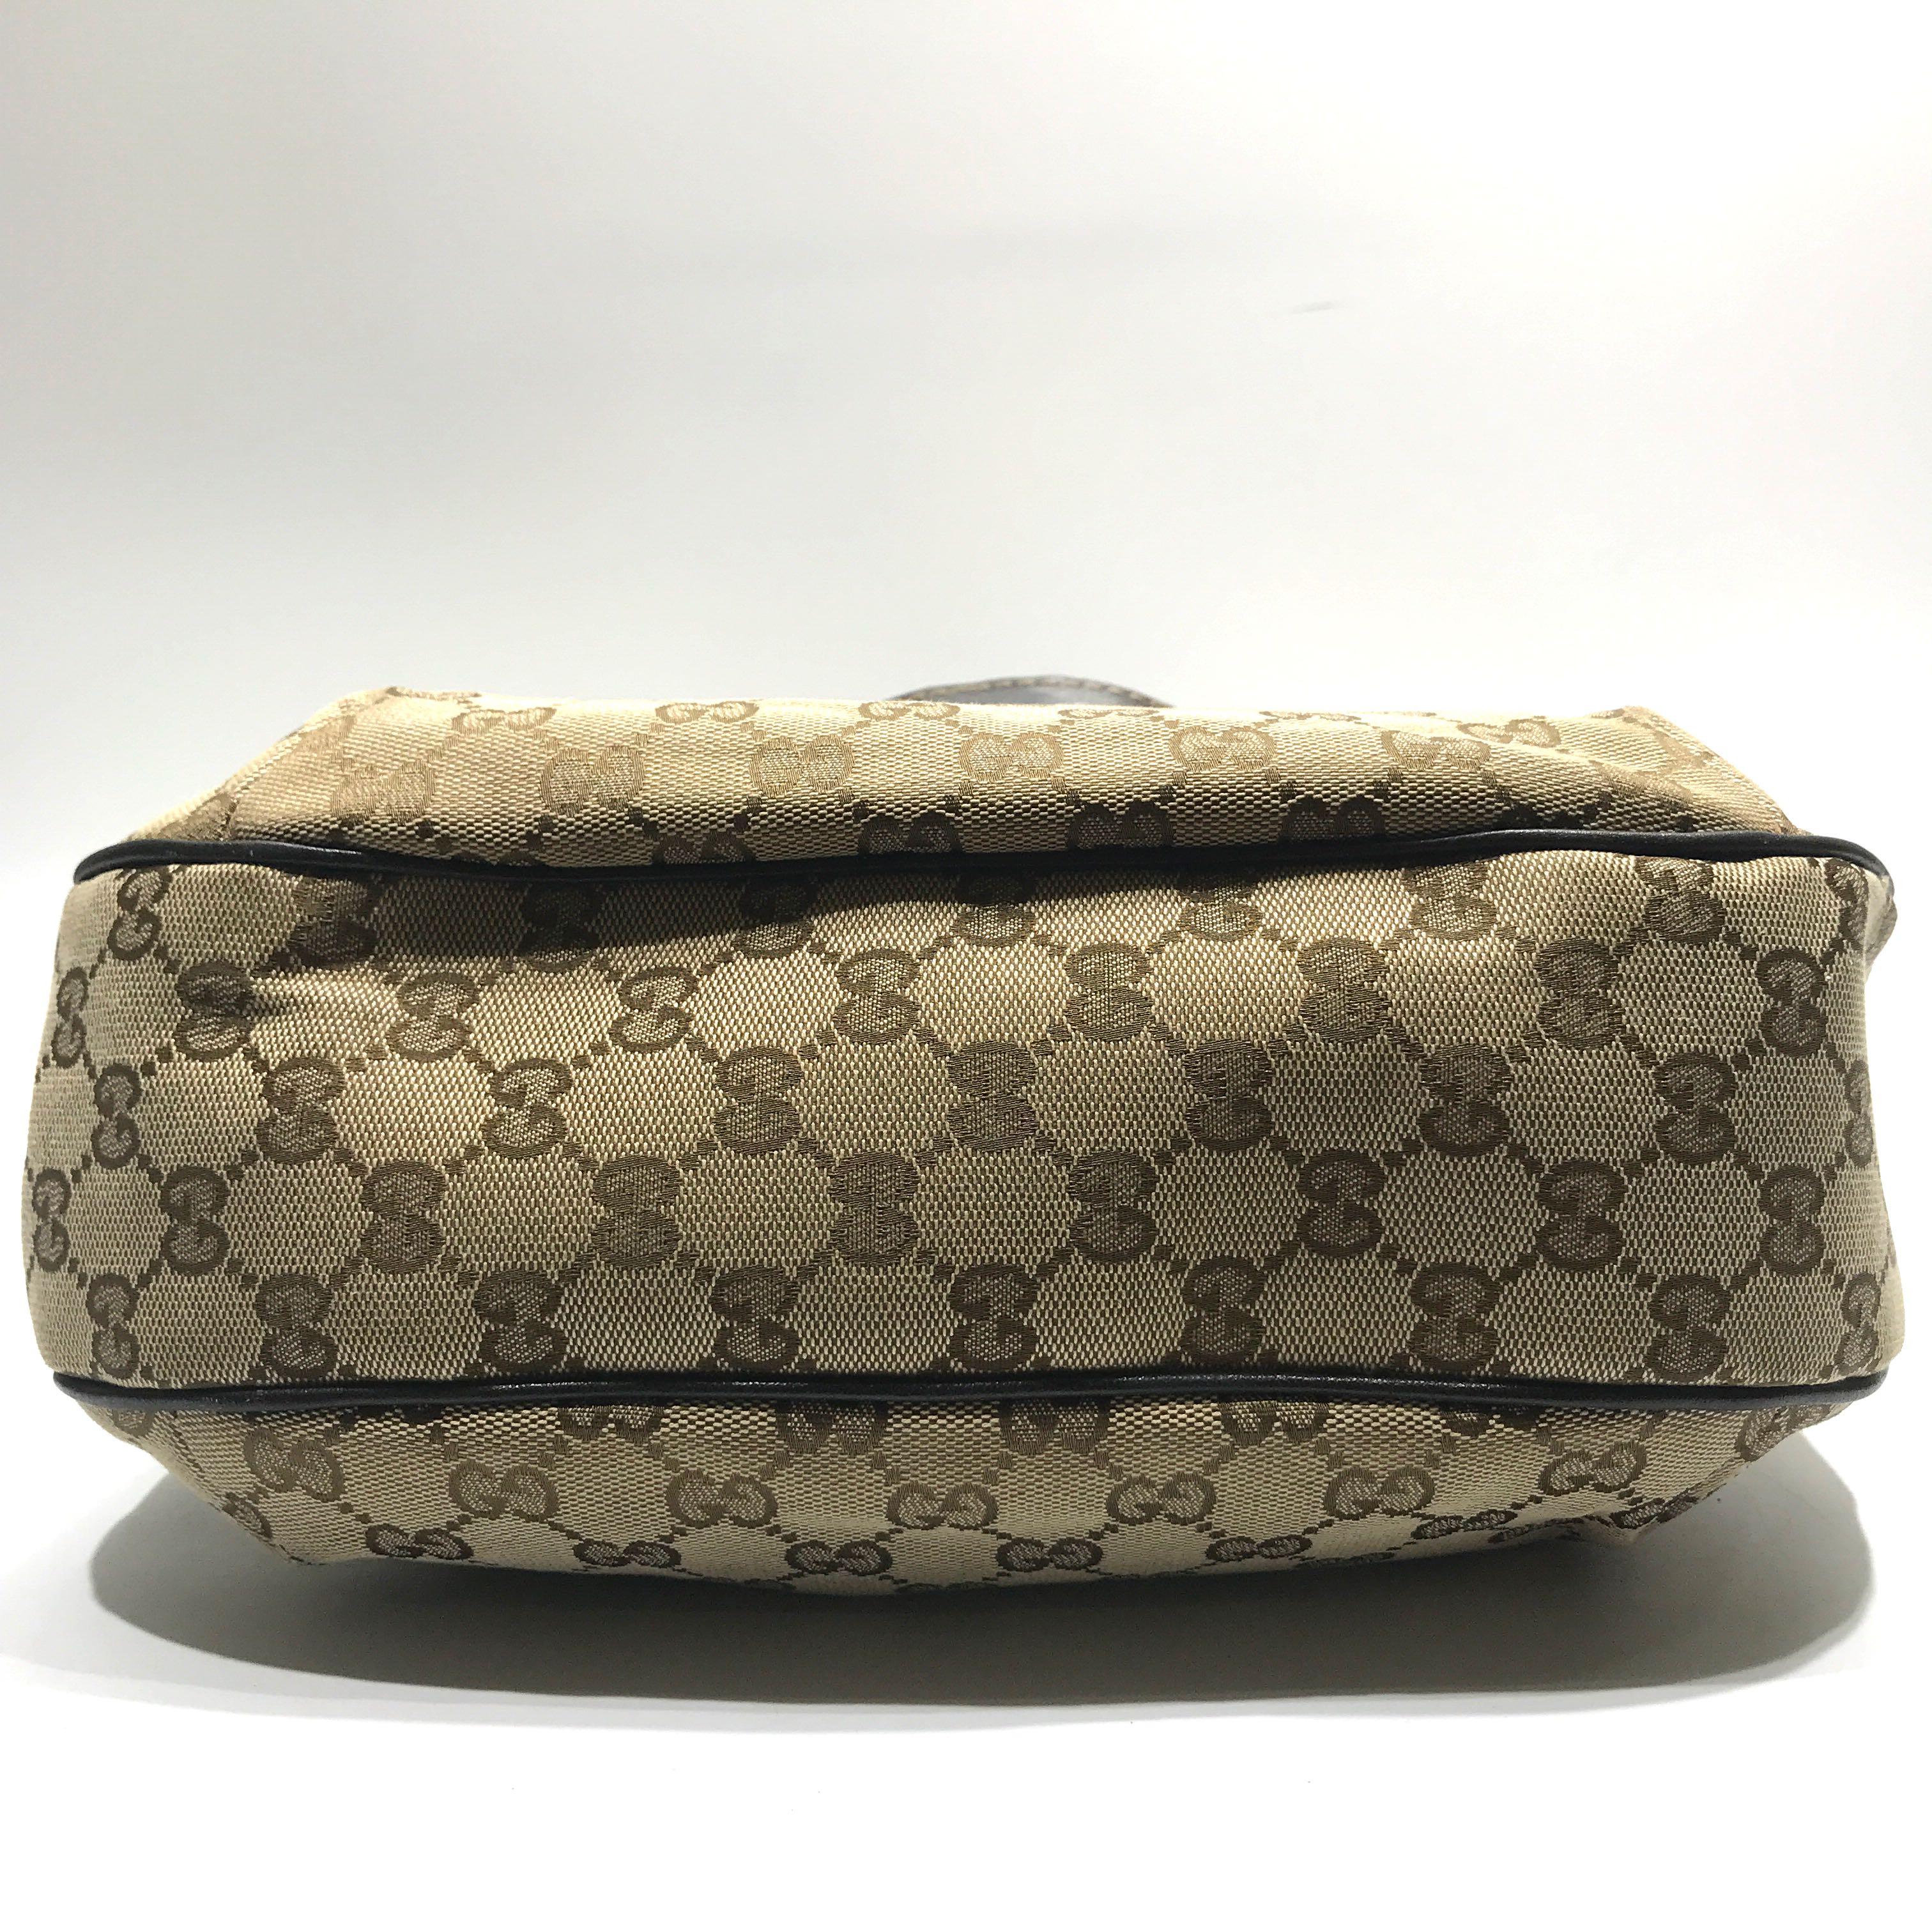 Gucci GG Marmont Mini Matelassé Chain Bag